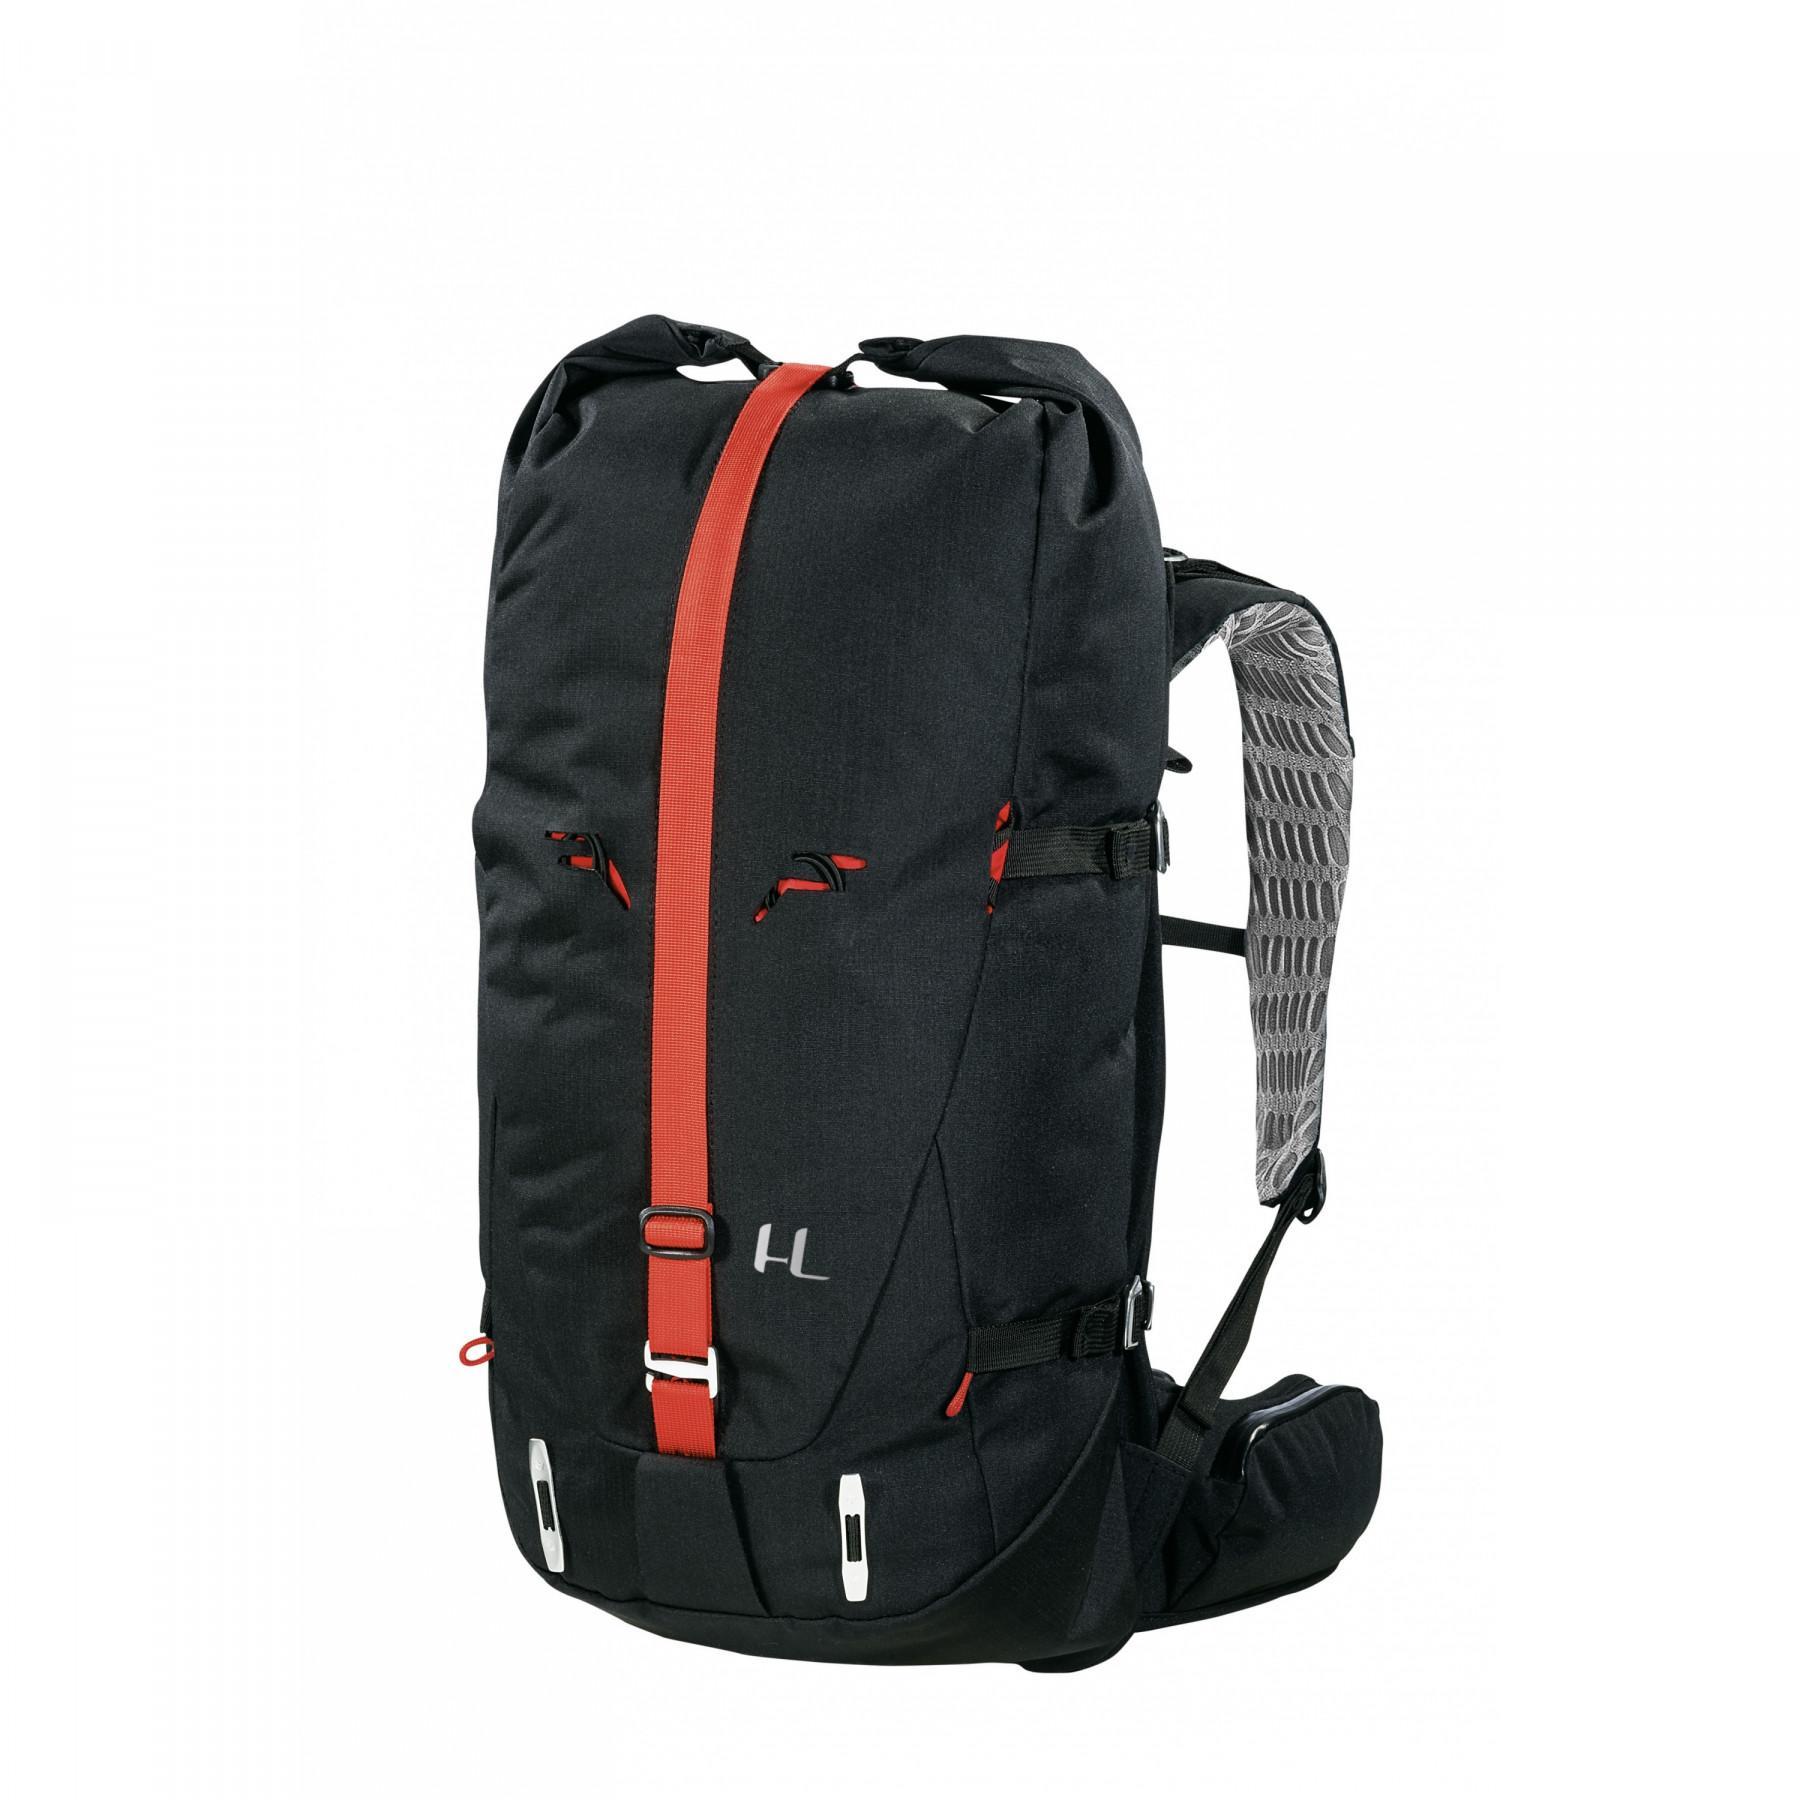 Backpack Ferrino Xmt 40+5 L